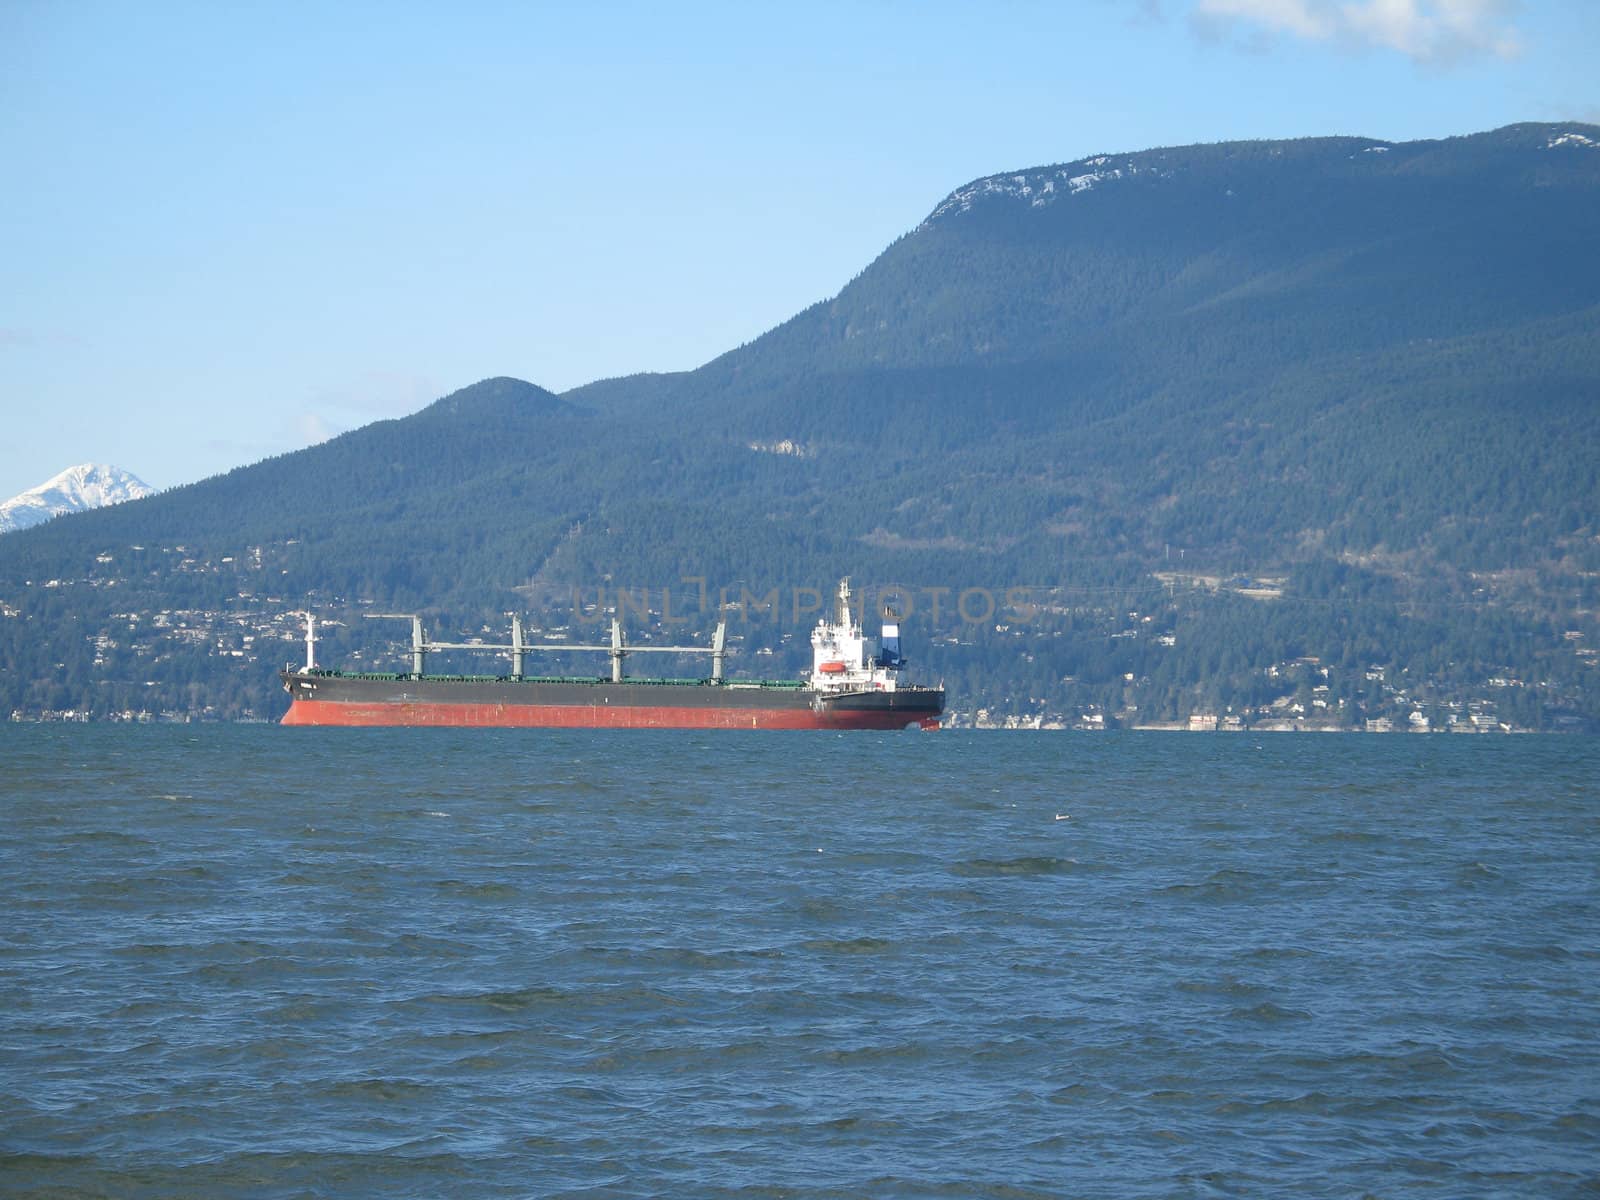 large tanker on the ocean